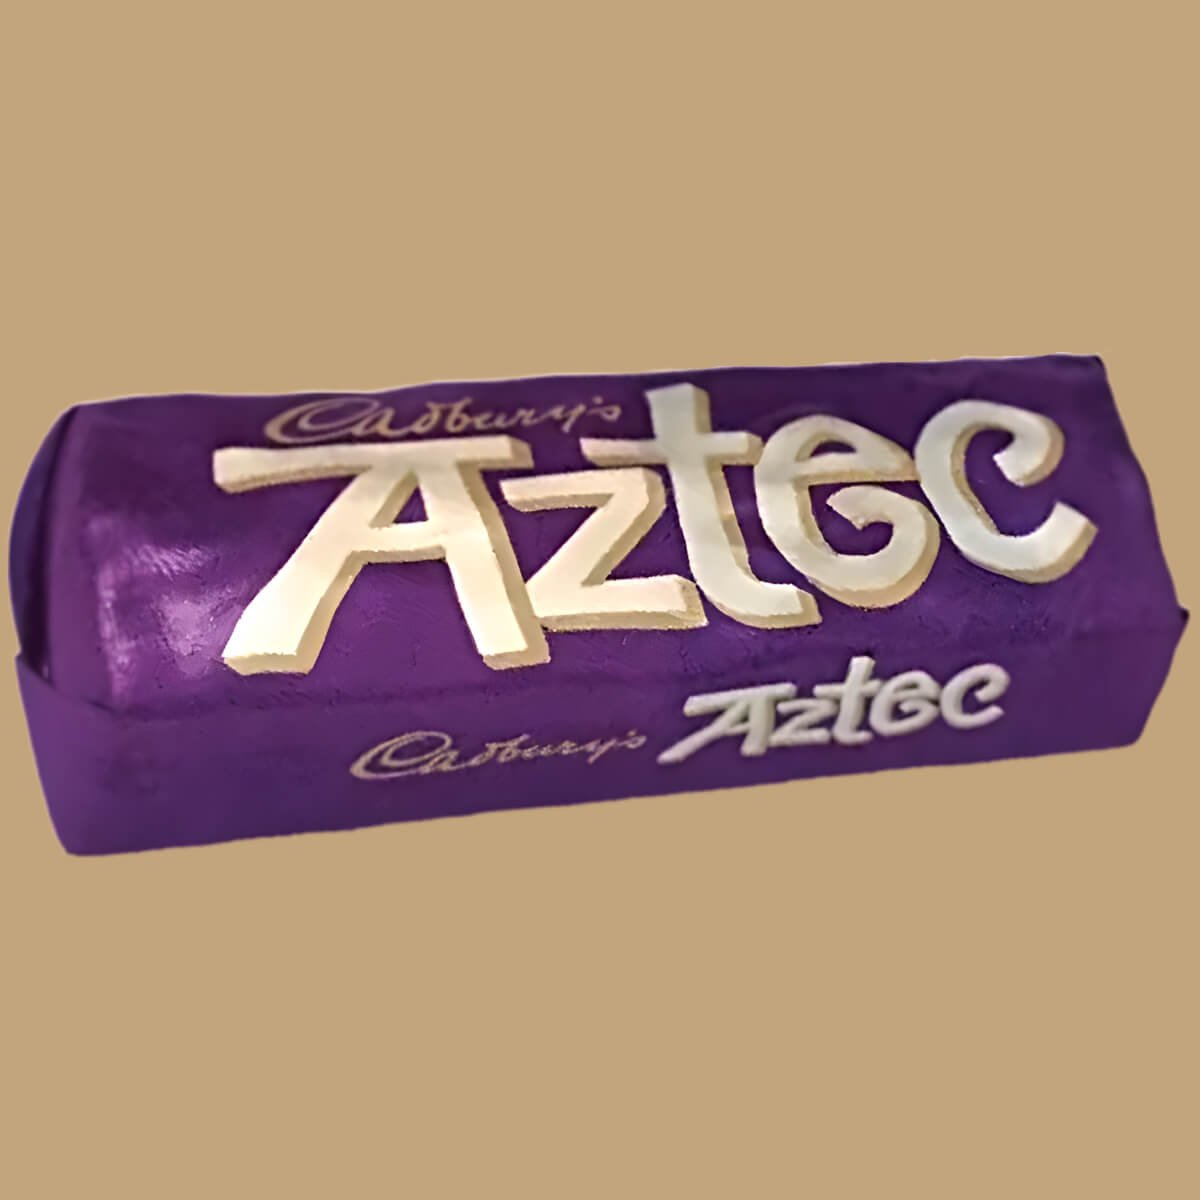 Cadbury's Aztec chocolate bar in purple wrapper